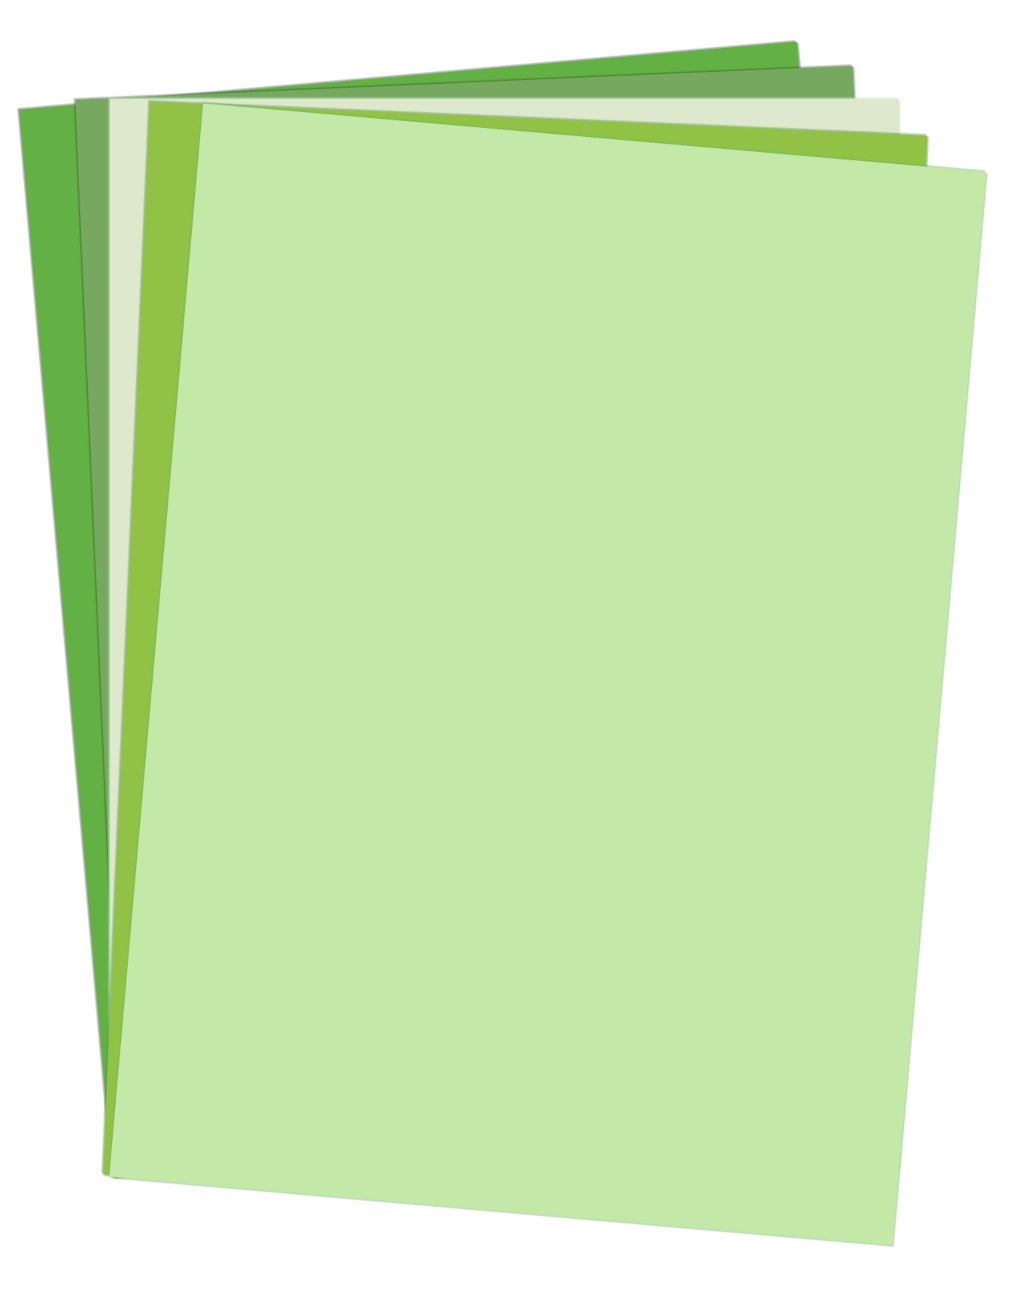 Dalton Manor A4 Shades of Green Paper PK100 - WL Coller Ltd